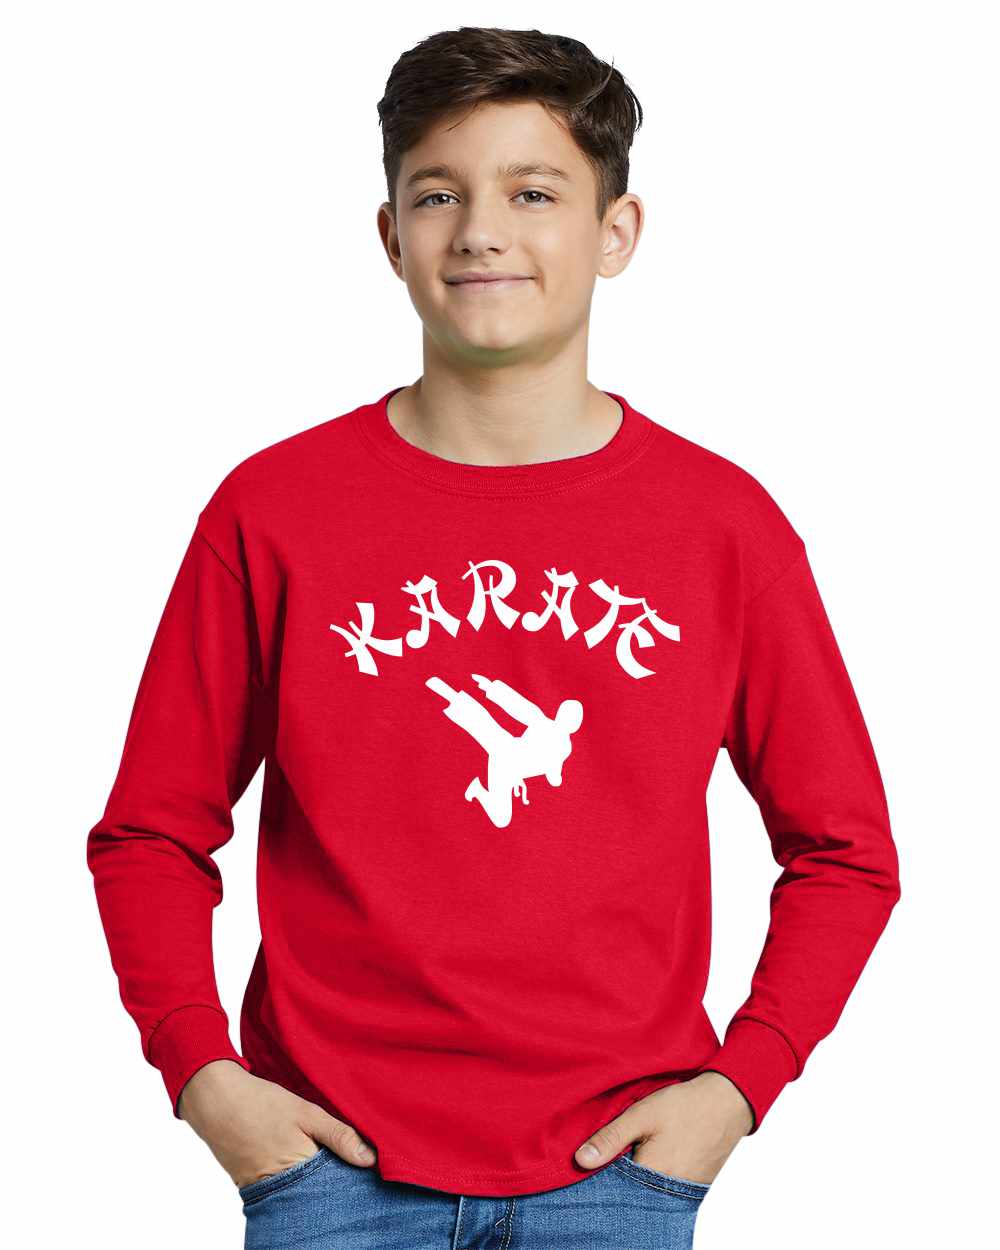 KARATE on Youth Long Sleeve Shirt (#744-203)